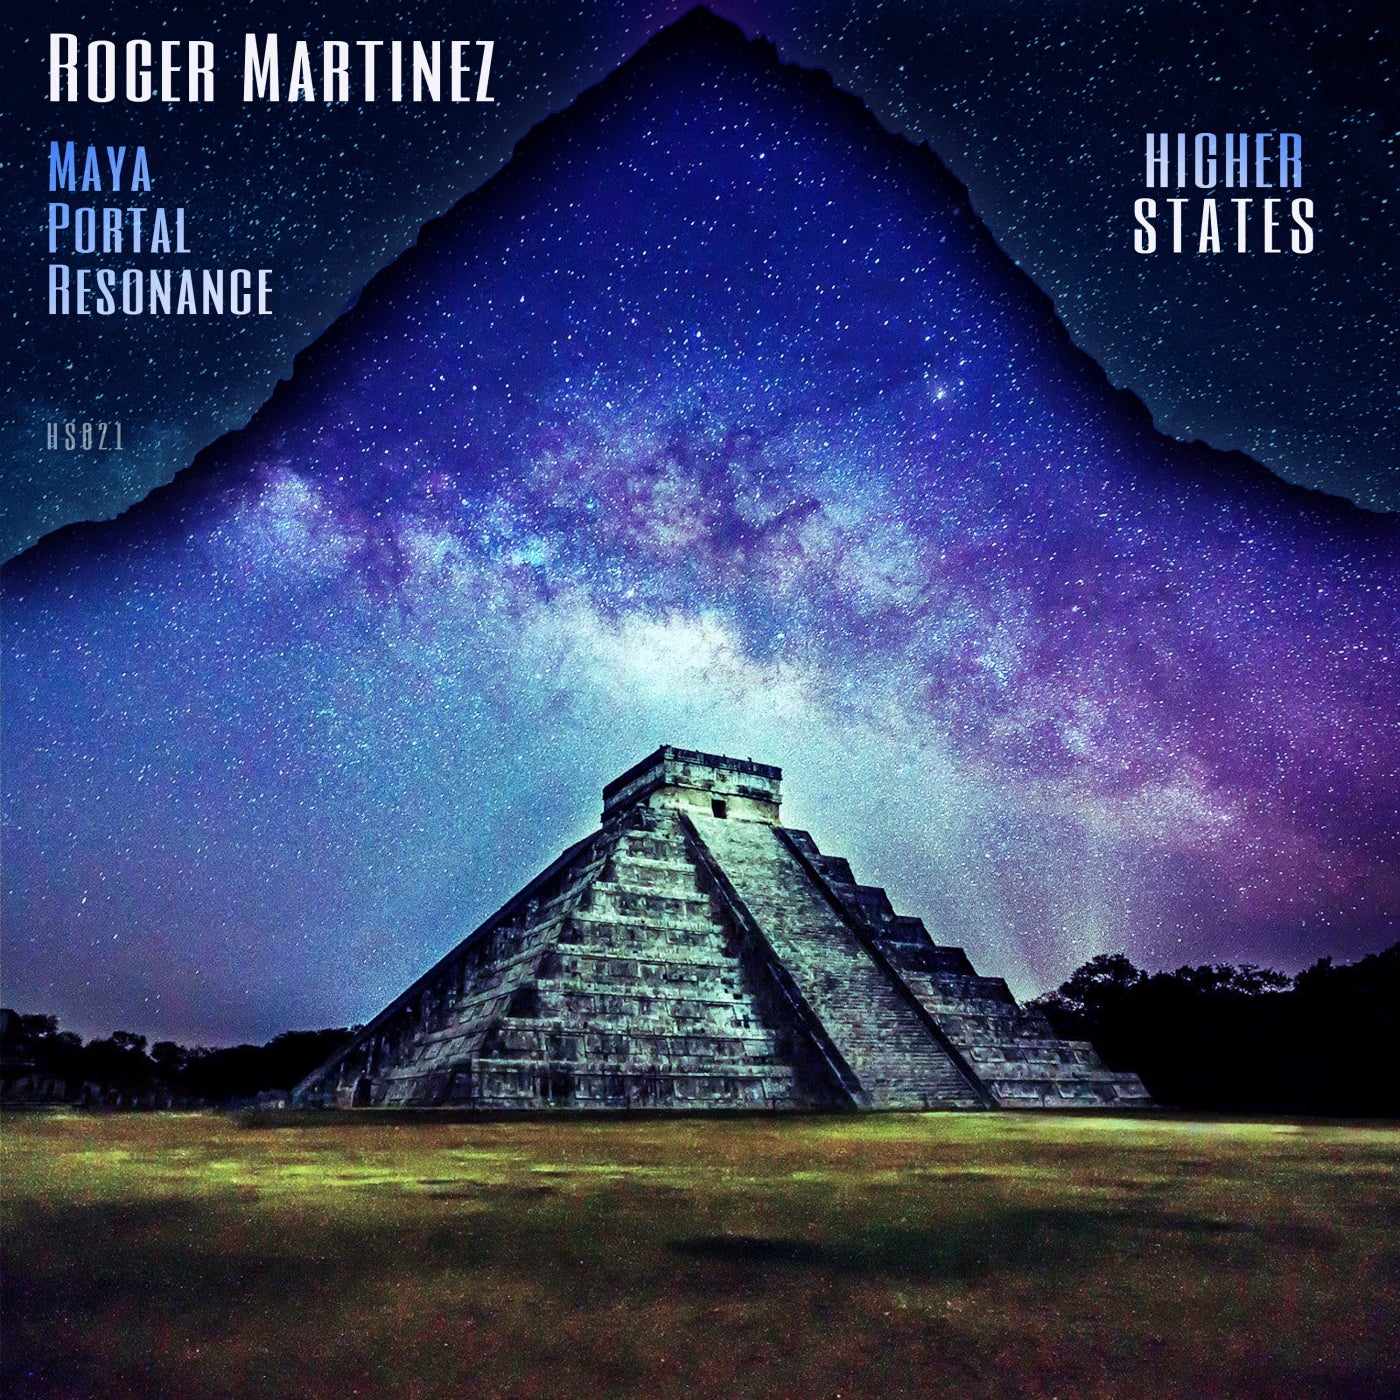 Cover - Roger Martinez - Resonance (Original Mix)